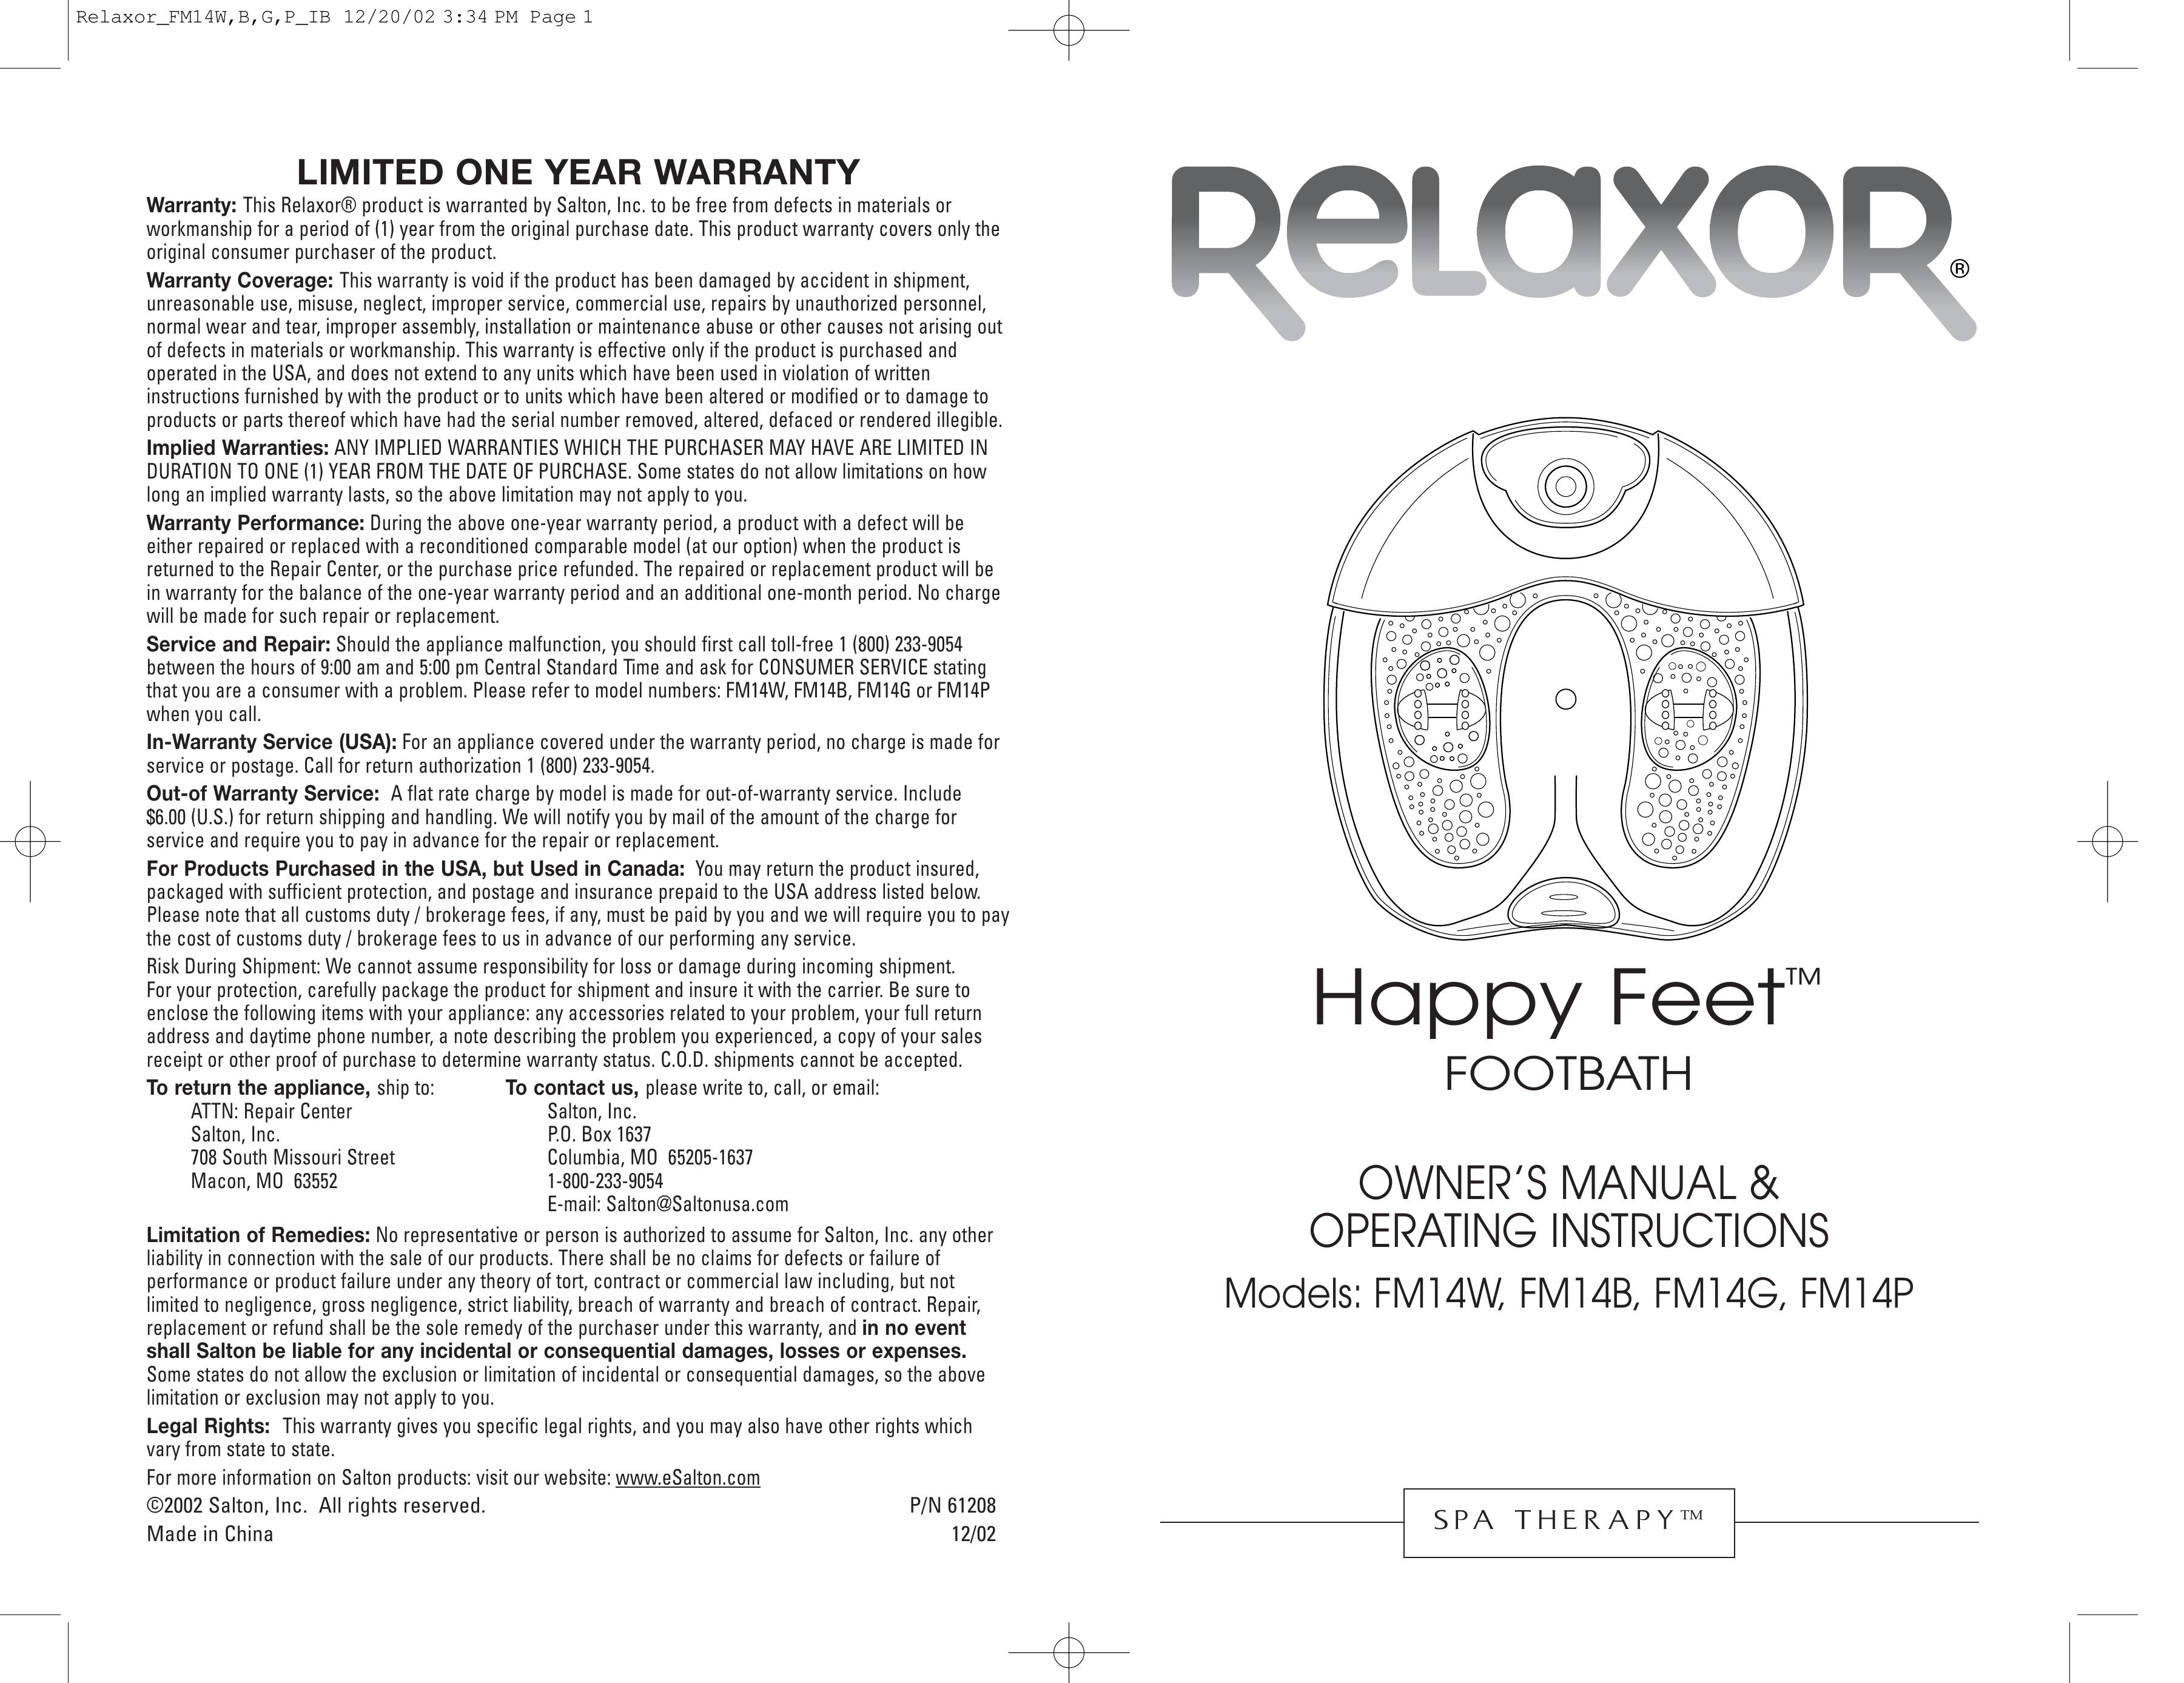 Salton FM14P Pedicure Spa User Manual